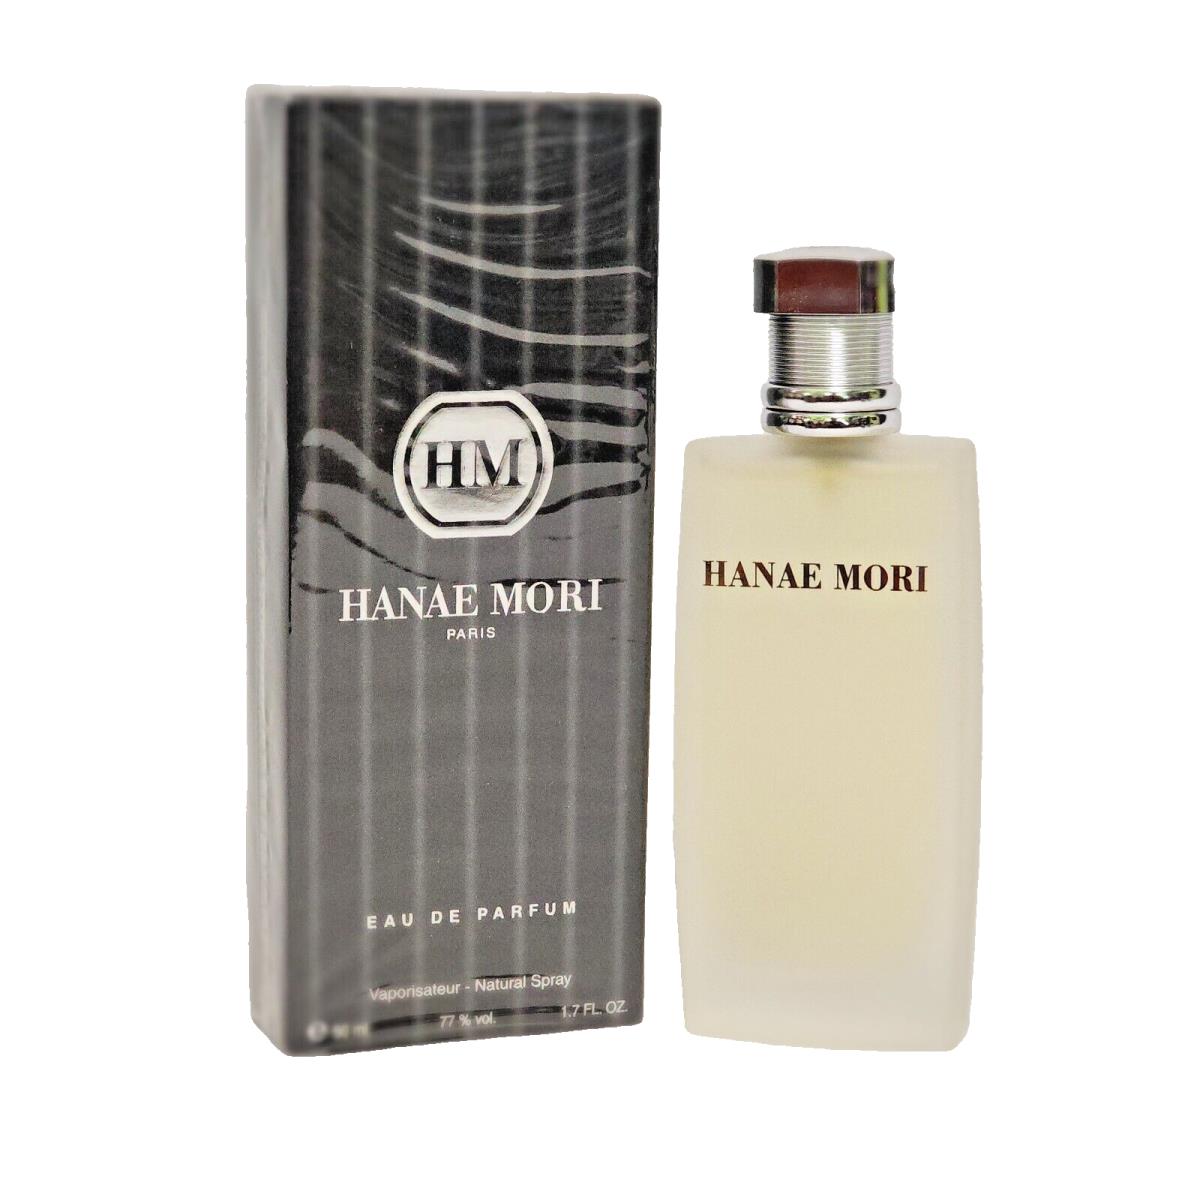 Hanae Mori by Hanae Mori Men 1.7oz / 50 ml Eau de Parfum Spray Box